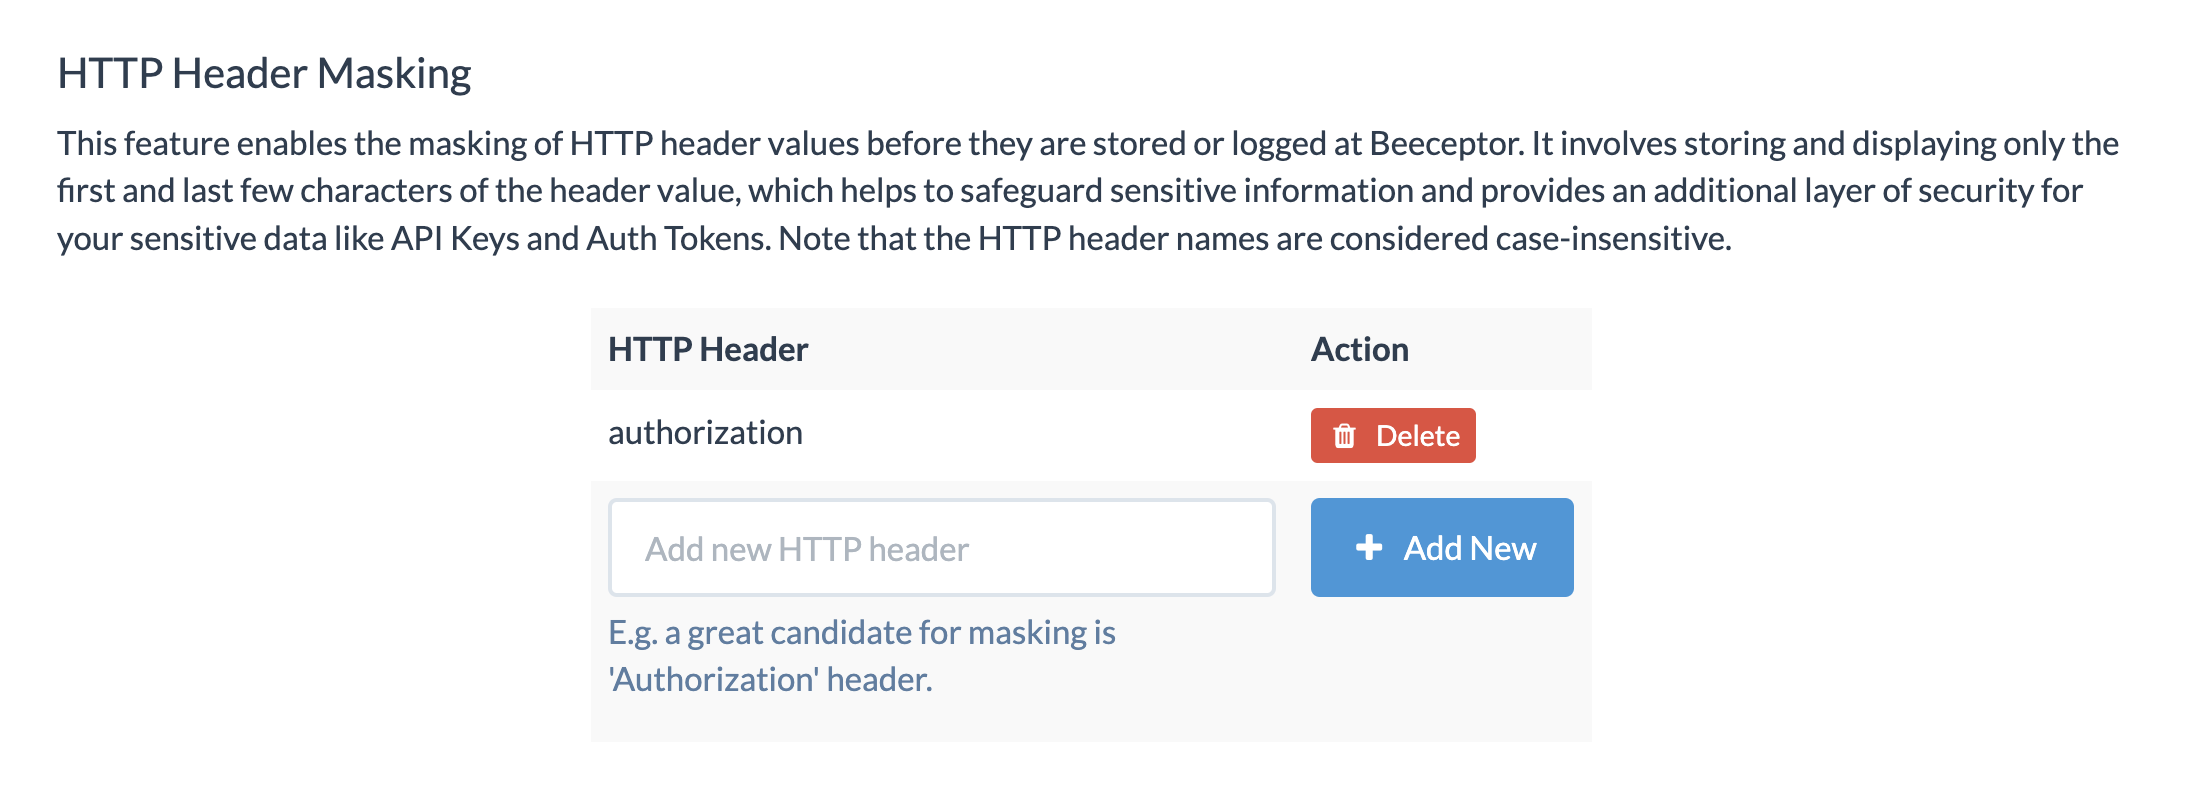 HTTP headers masking in Beeceptor